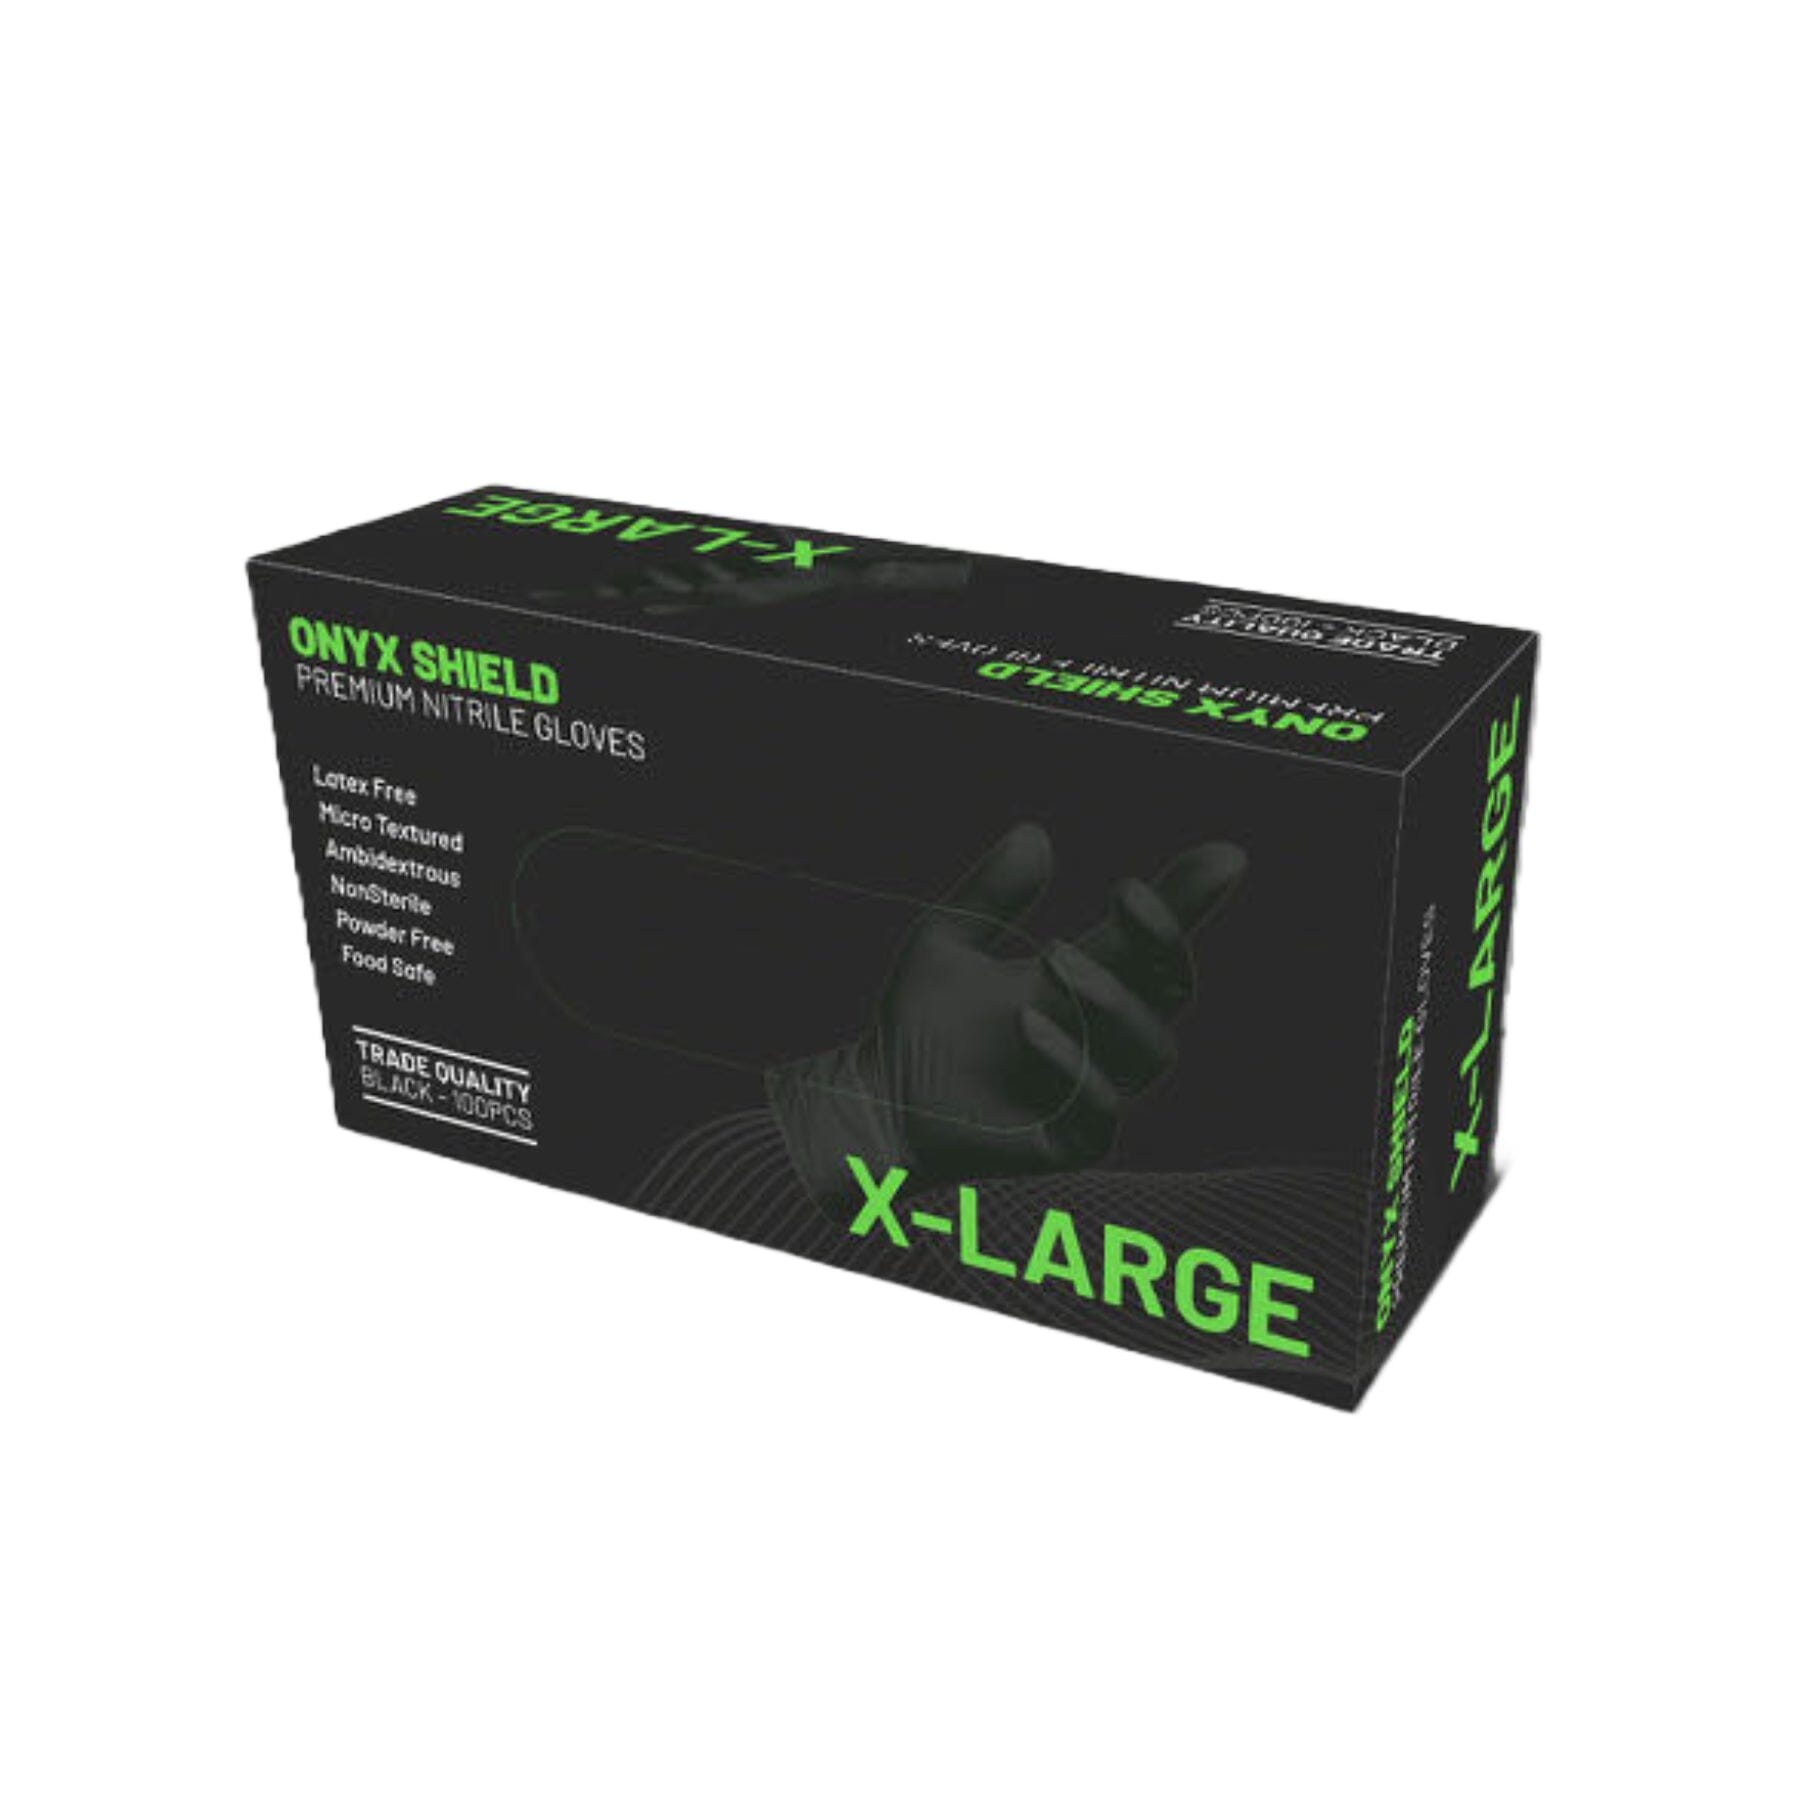 Black Premium Nitrile Gloves - Chemical, Oil, Heat Resistant - 100/box